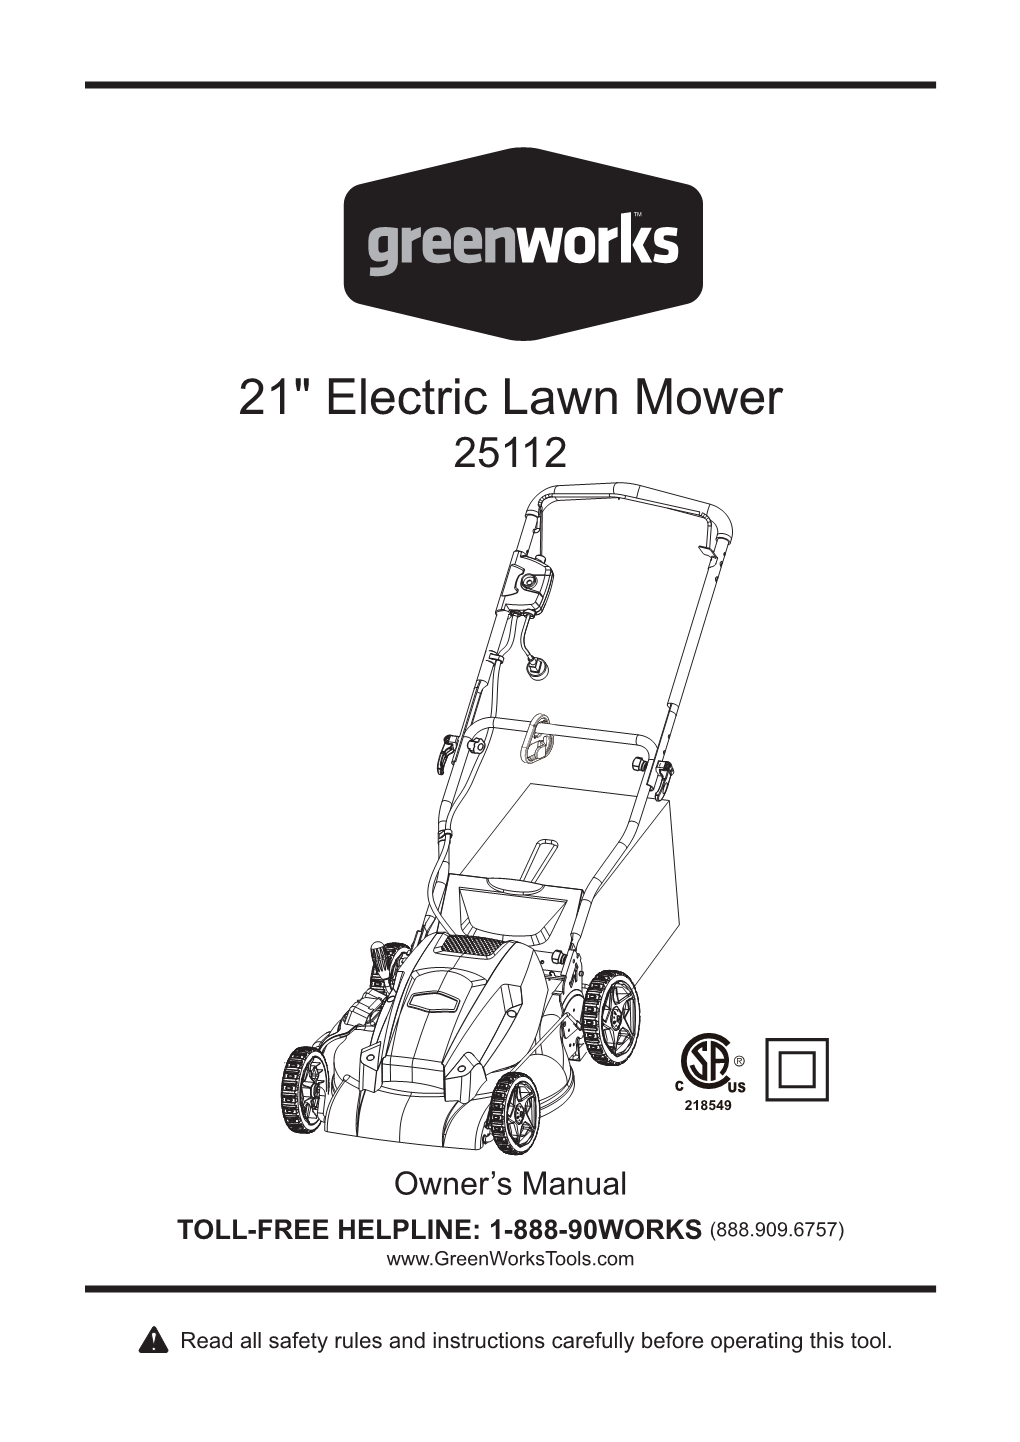 21" Electric Lawn Mower 25112